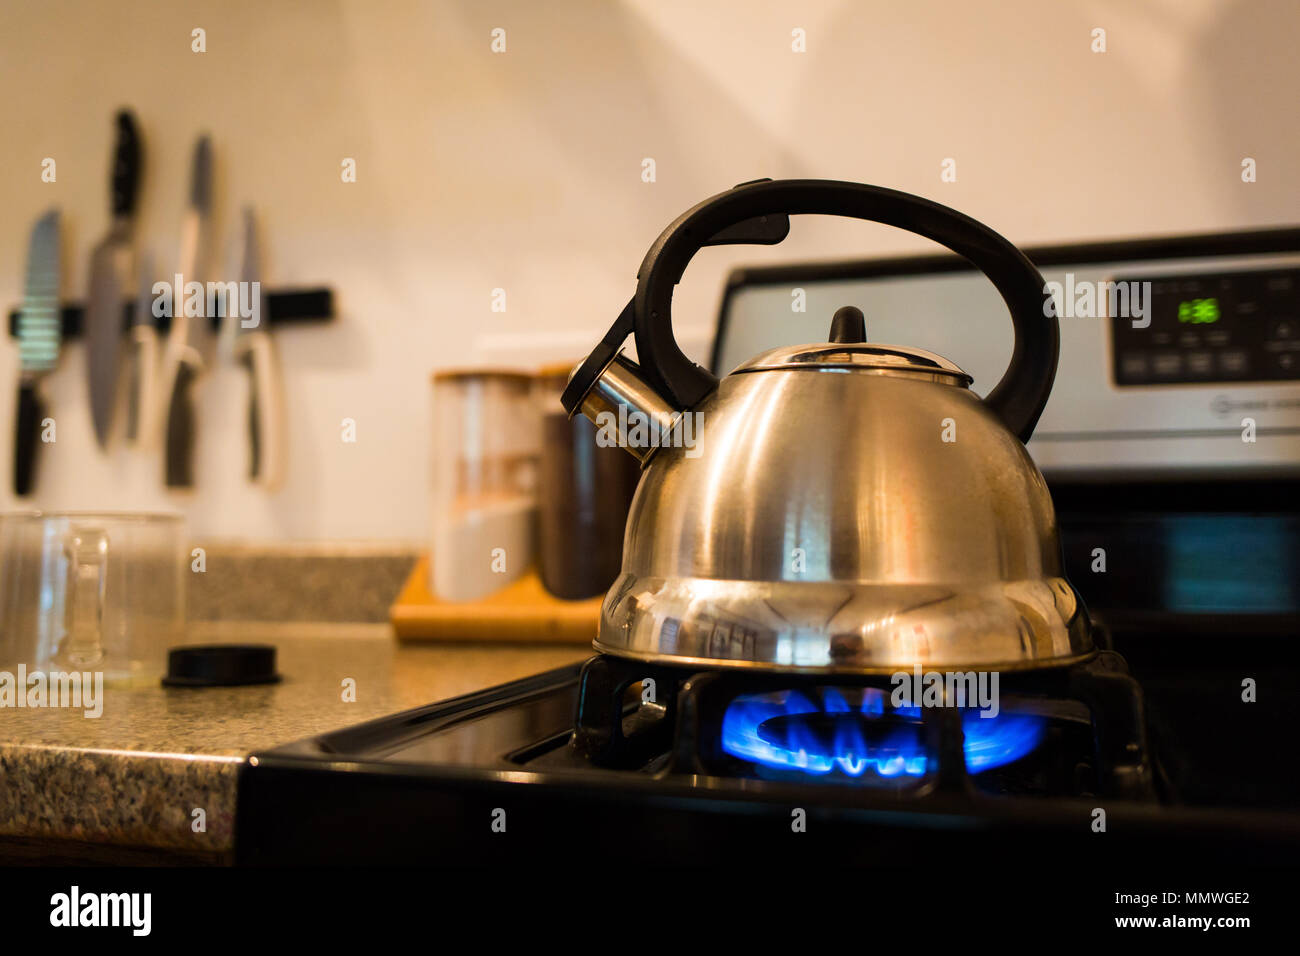 https://c8.alamy.com/comp/MMWGE2/boiling-water-in-kettle-gas-stove-morning-tea-heat-MMWGE2.jpg